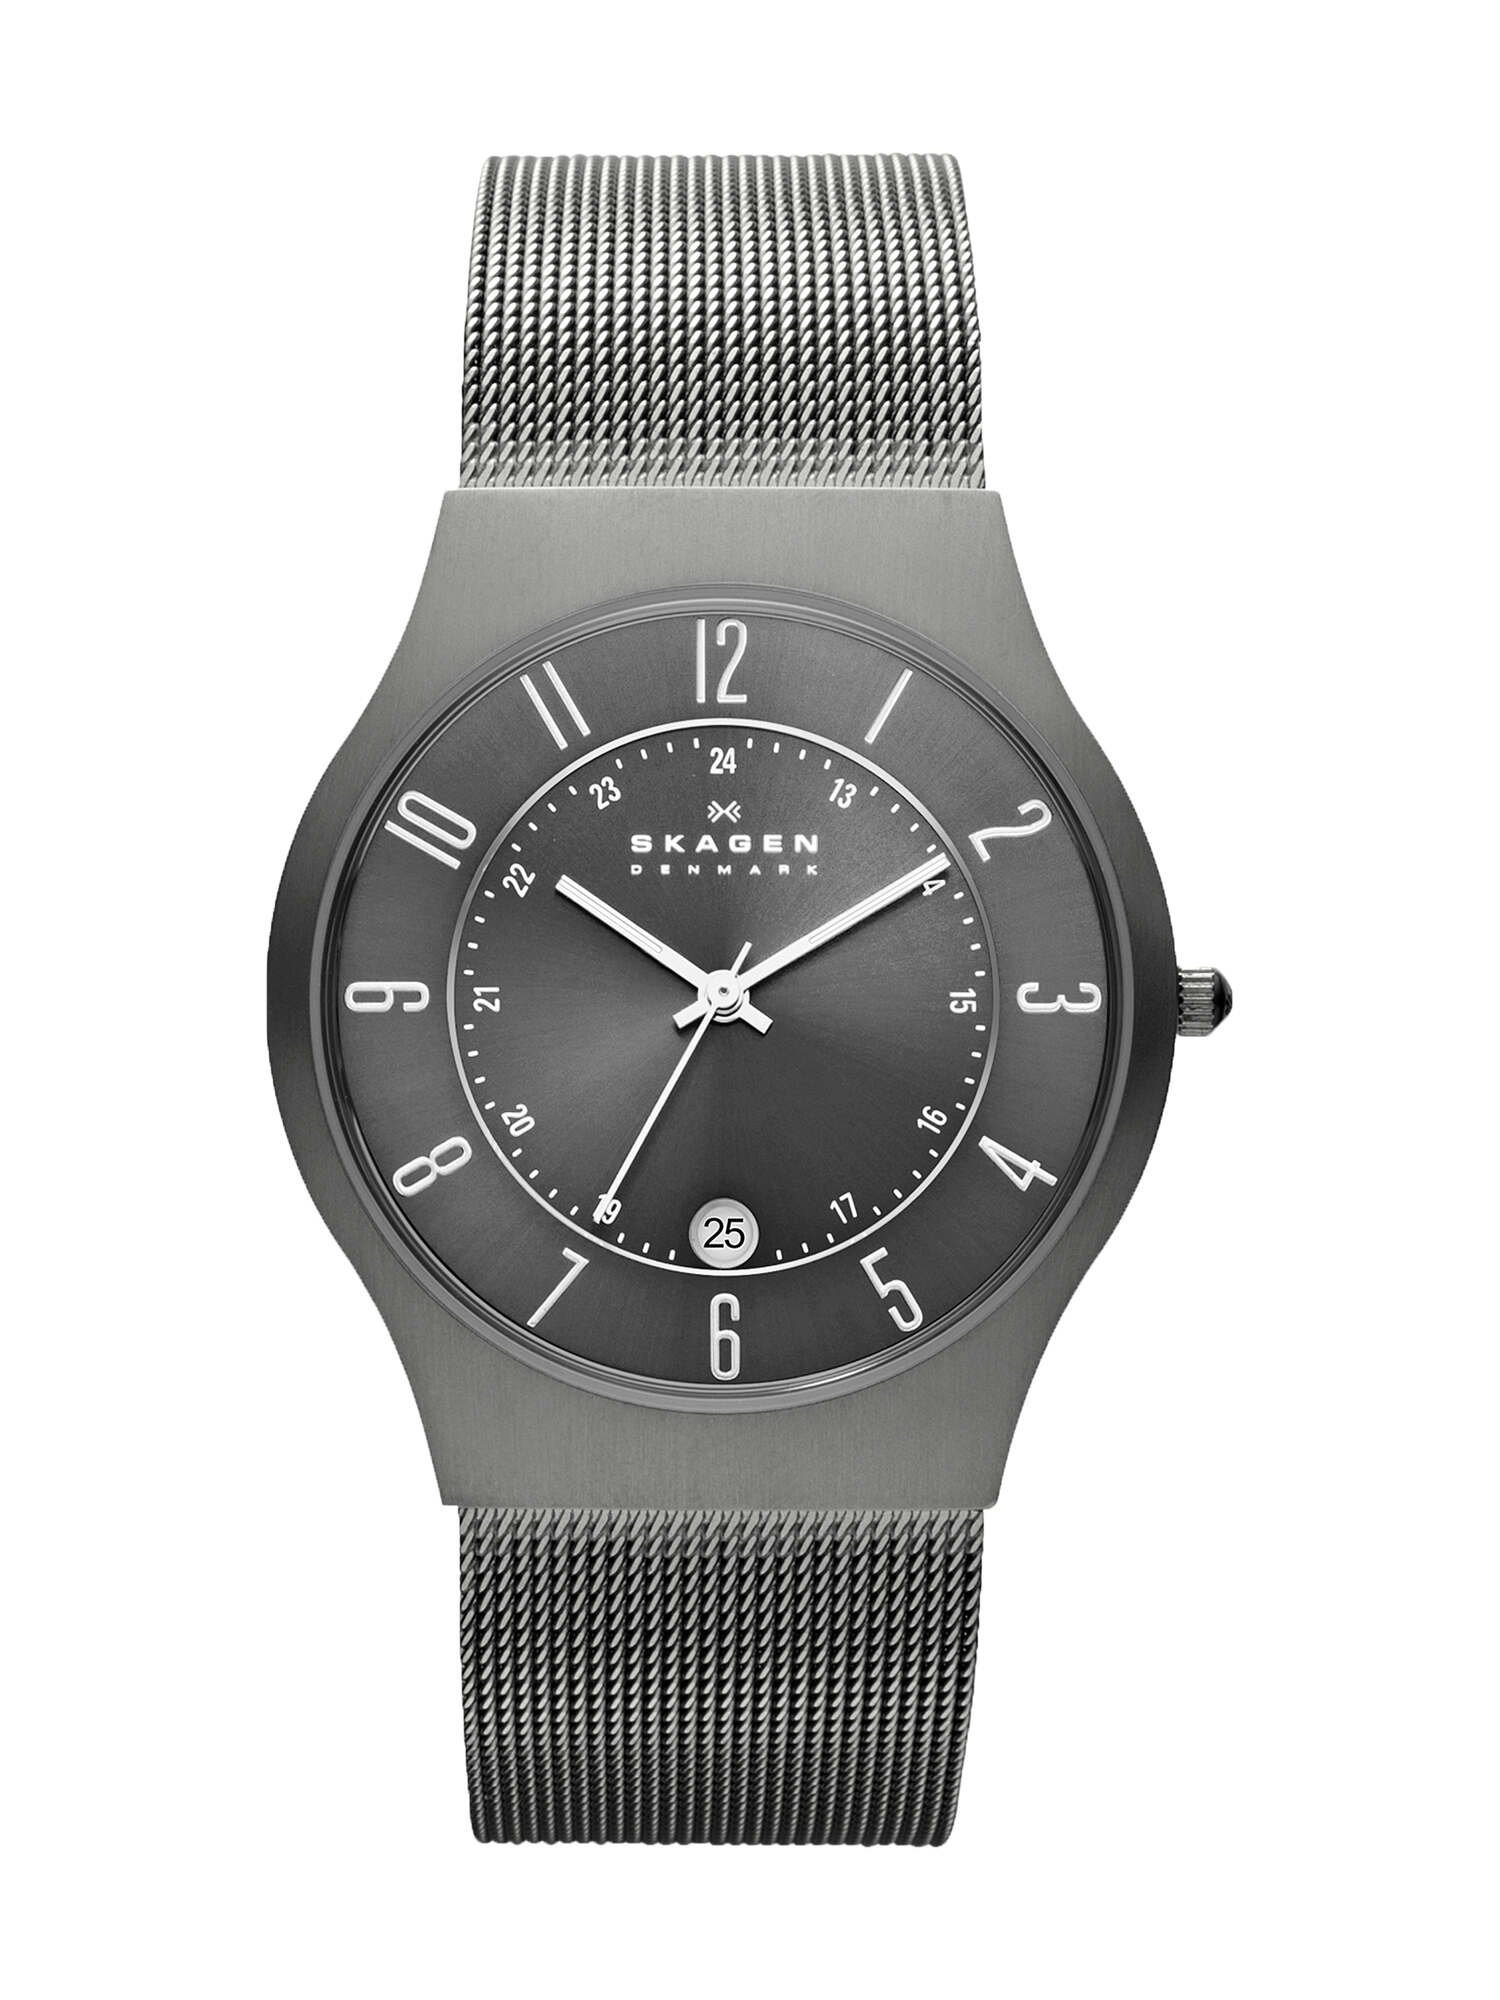 SKAGEN Sunby Titanium 233XLTTM スカーゲン アクセサリー・腕時計 腕時計 シルバー【送料無料】